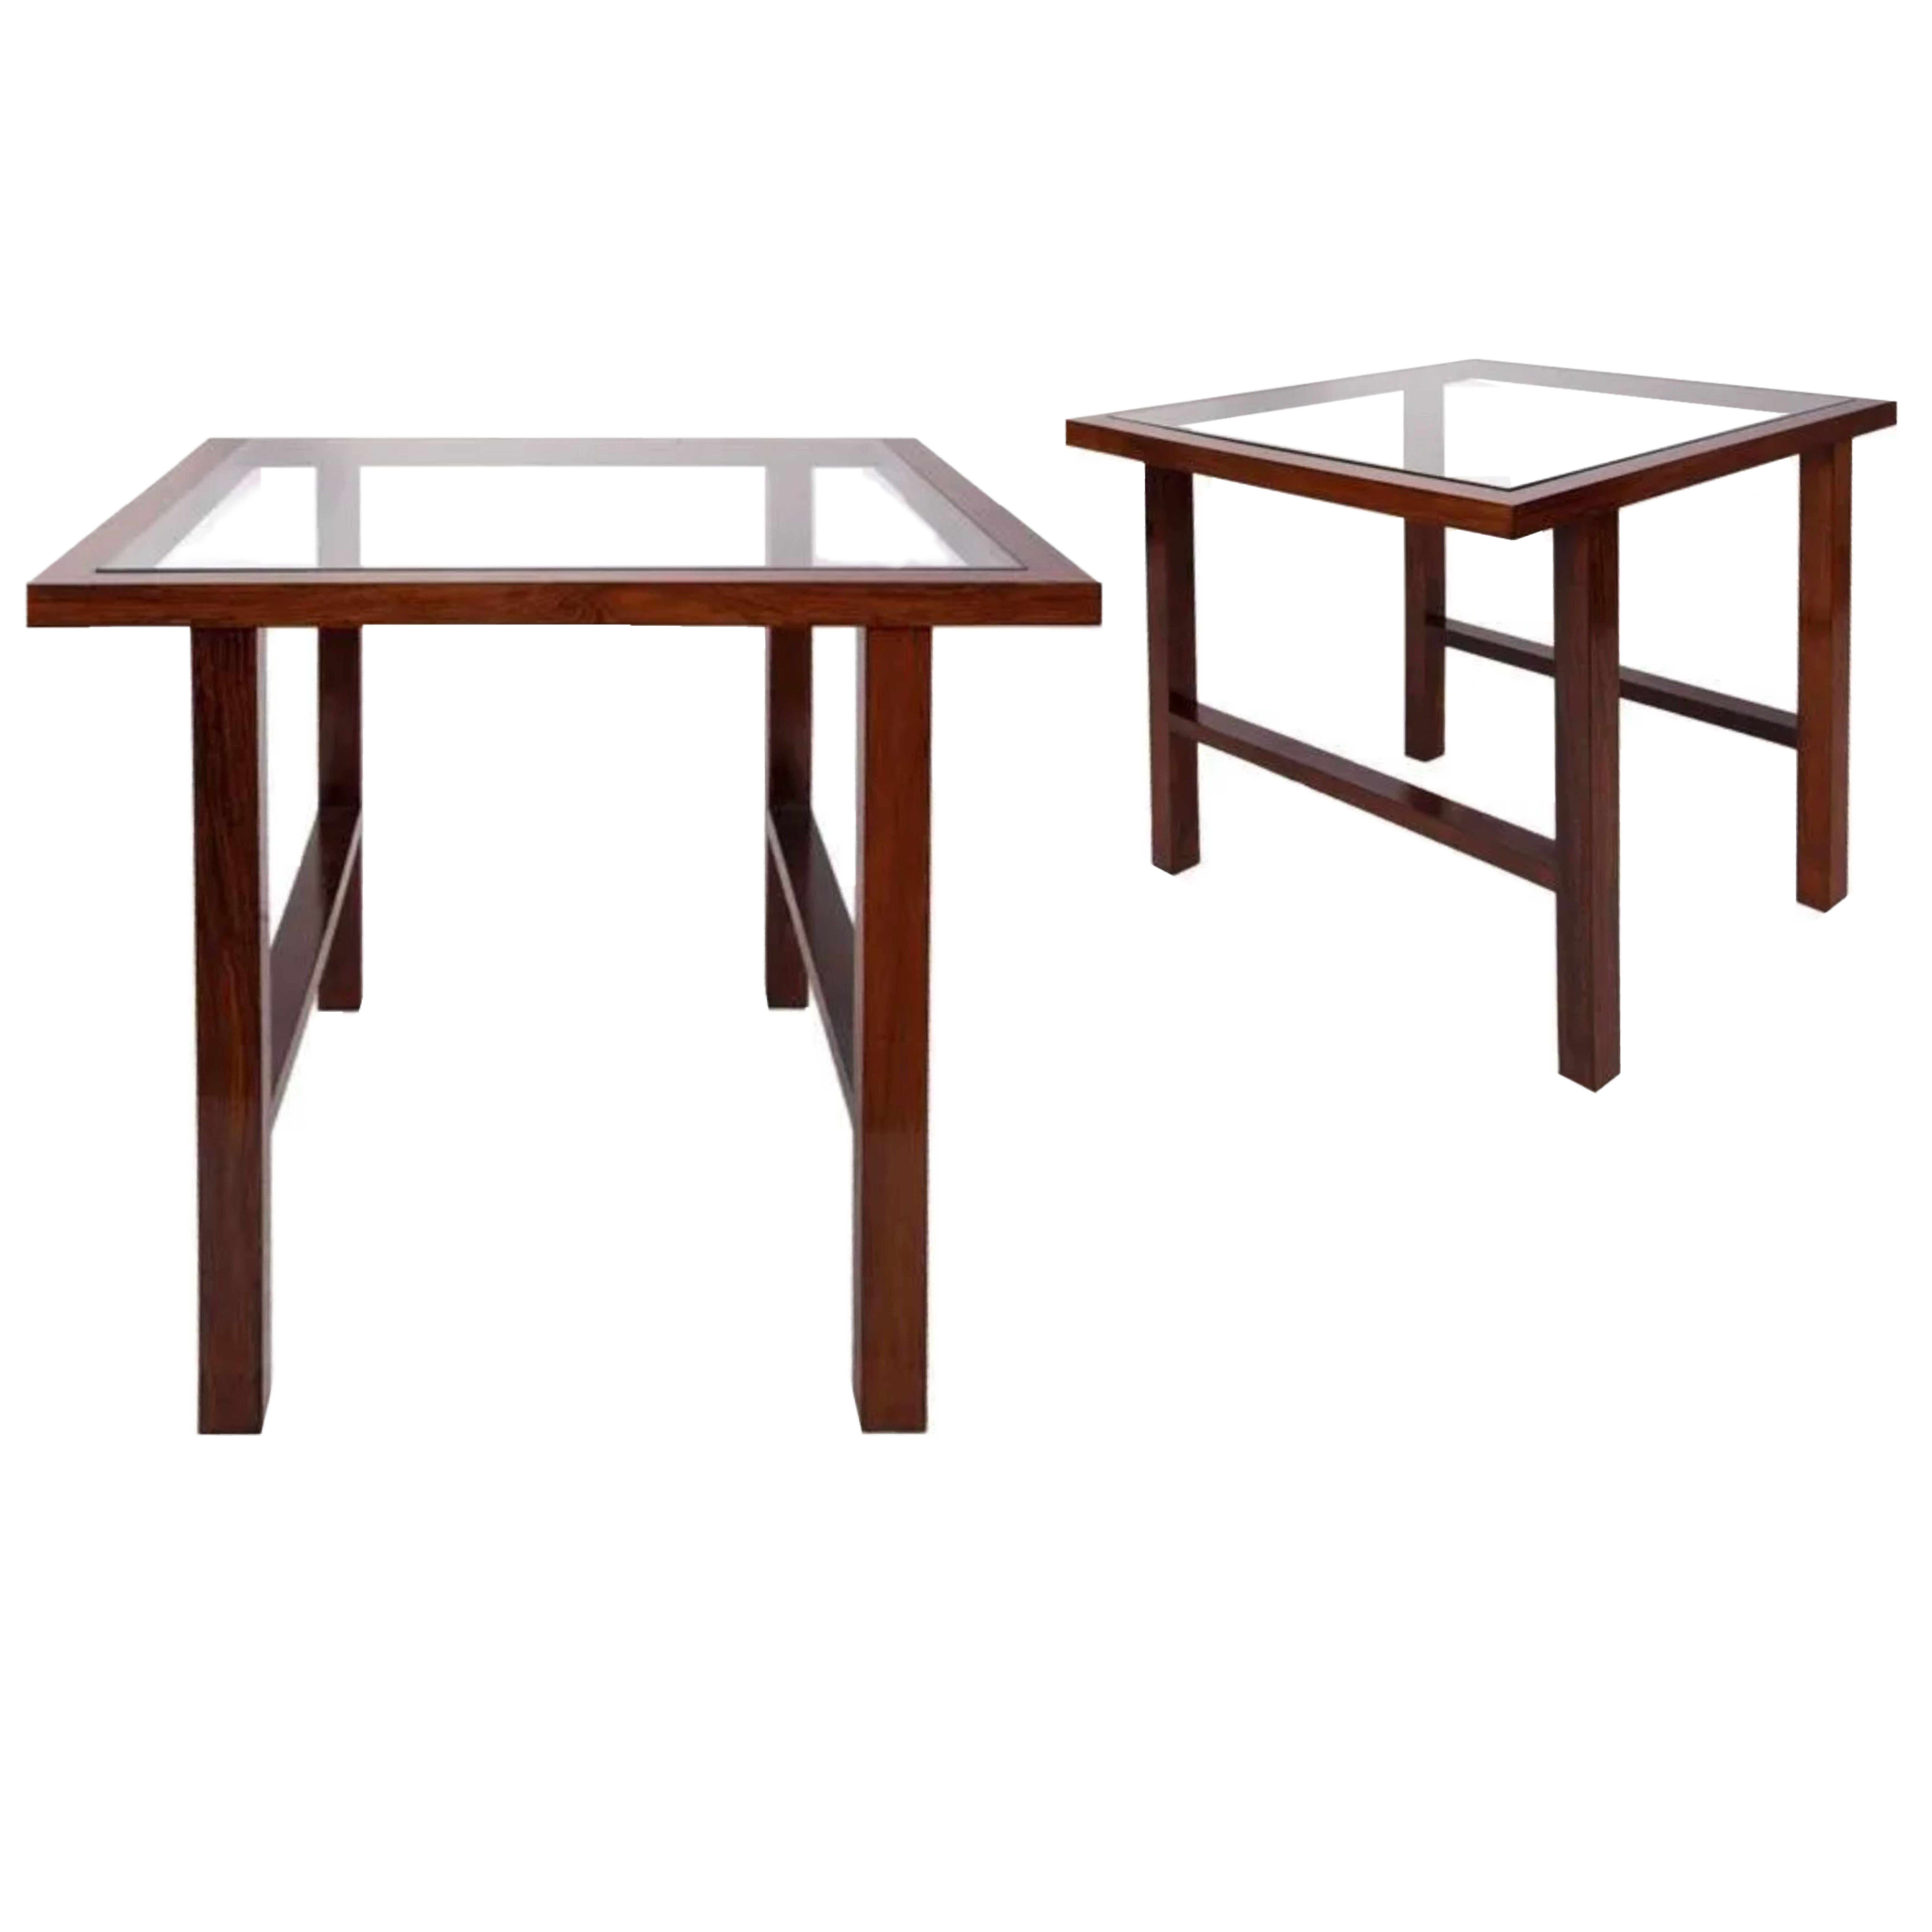 Branco & Preto Brazilian Mid-Century Modern side table with glass top set in Caviuna wood frame. 21.5